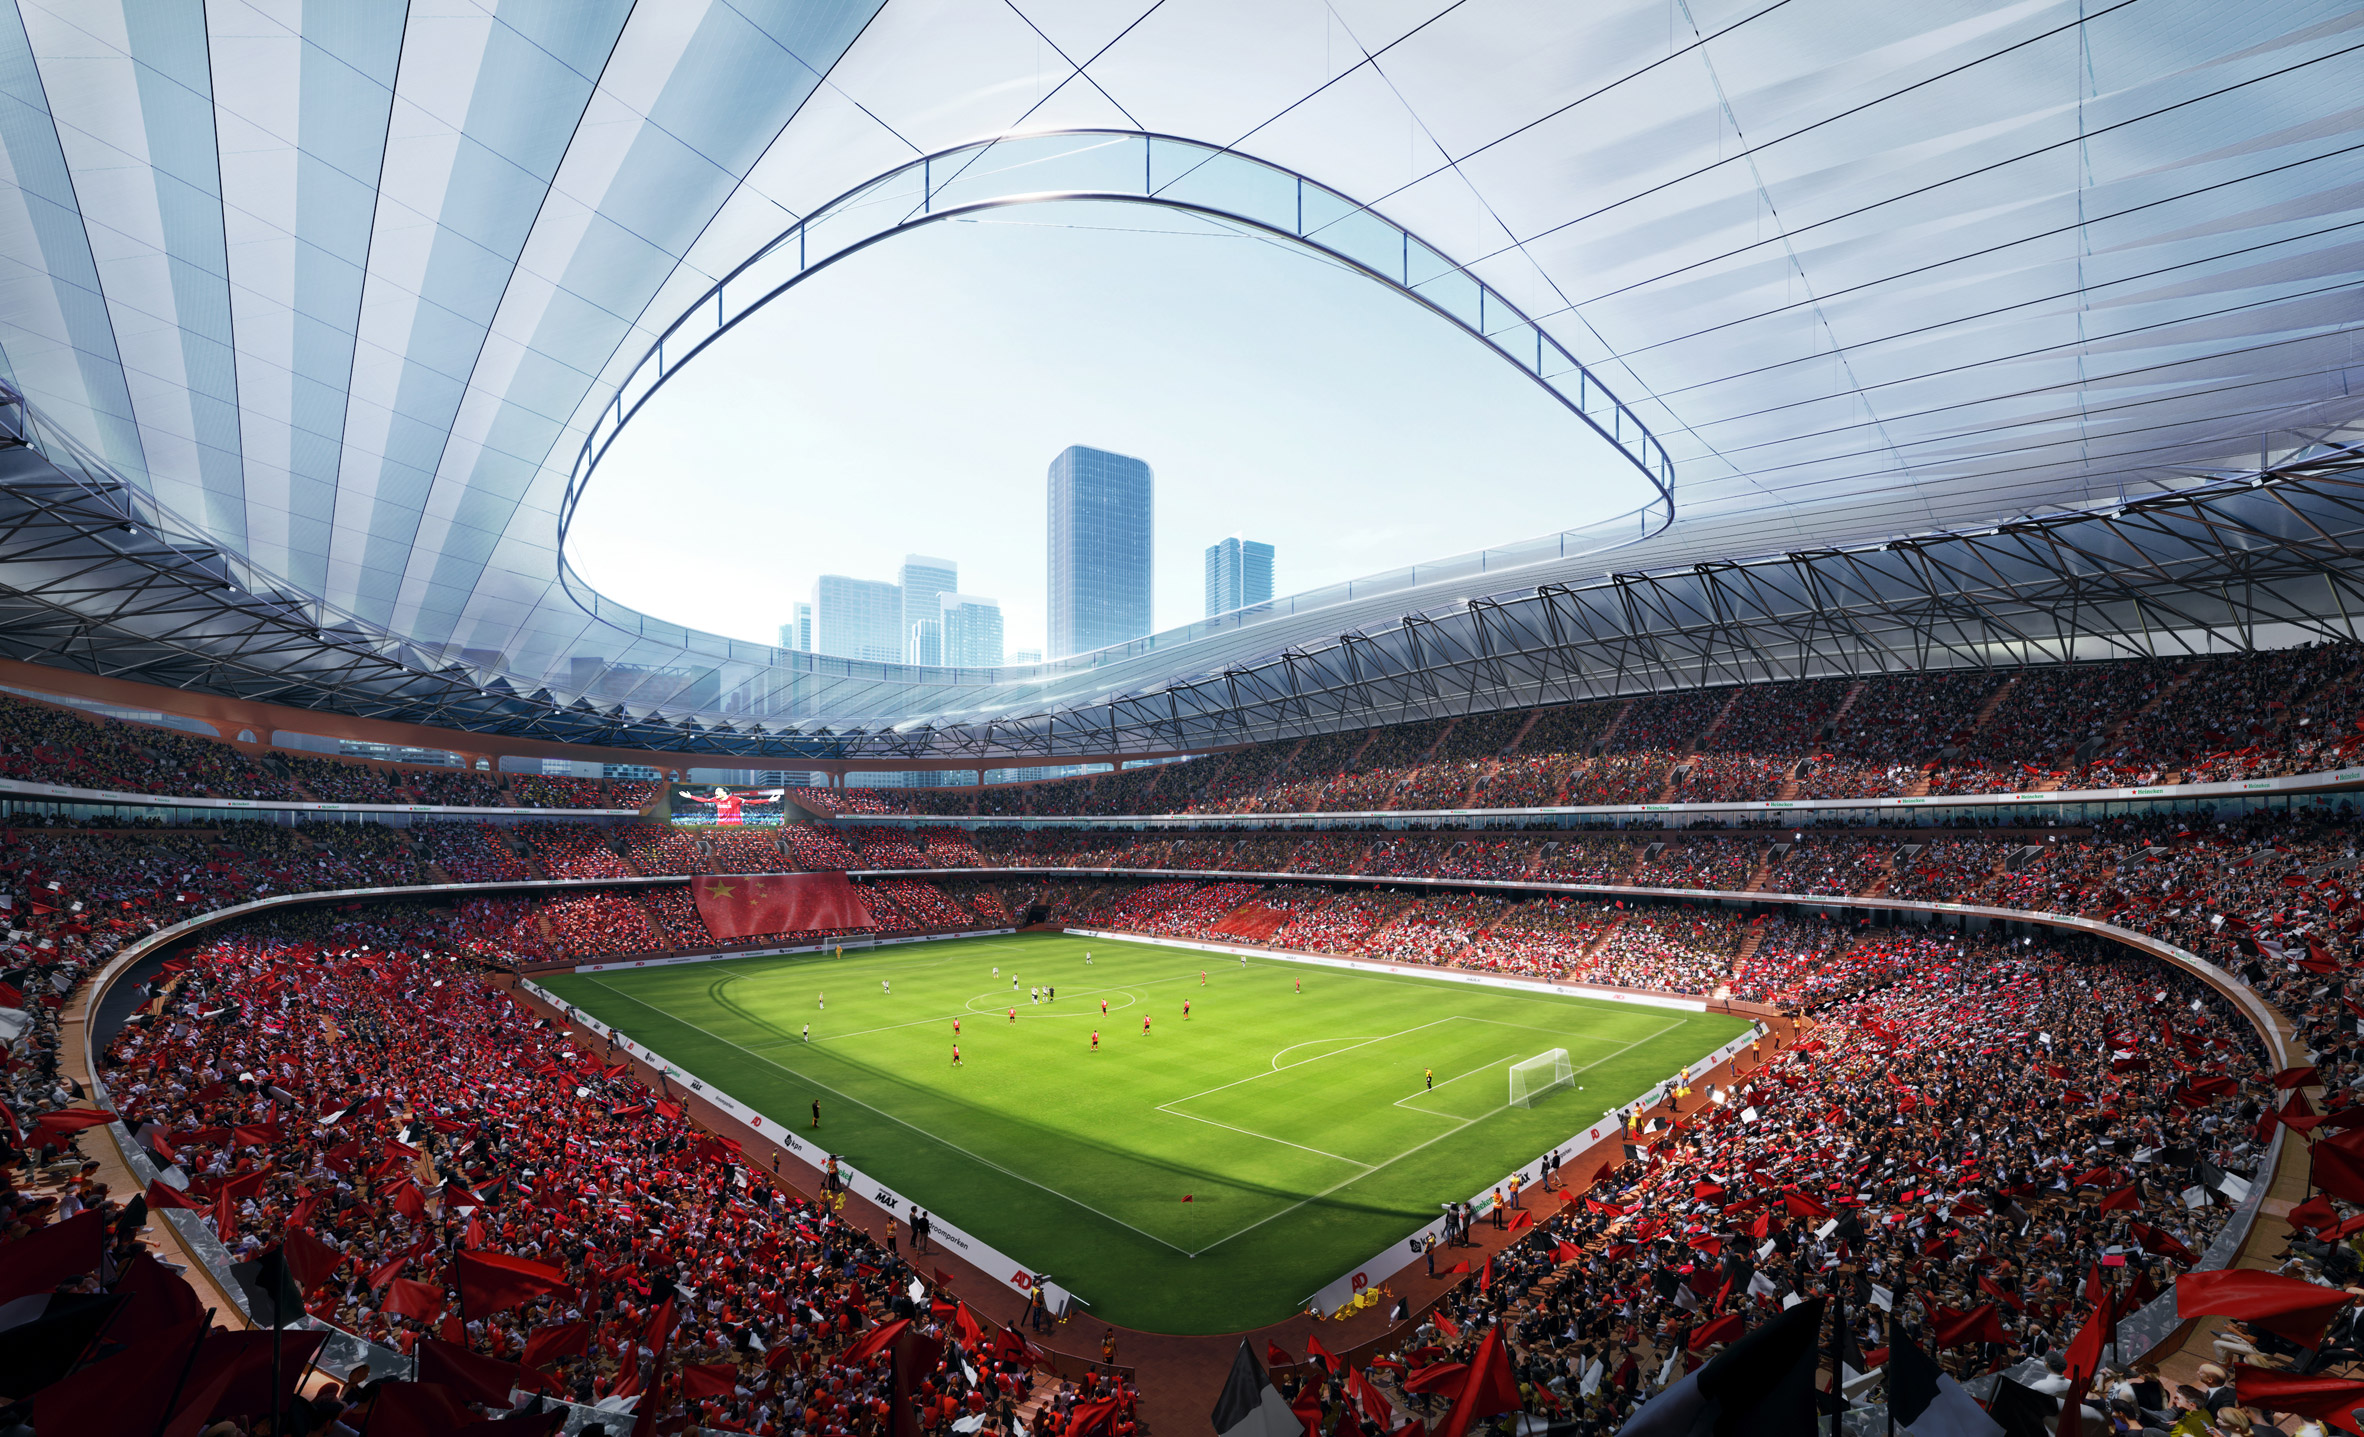 Xi'an International Football Centre stadium proposal by Zaha Hadid Architects in China